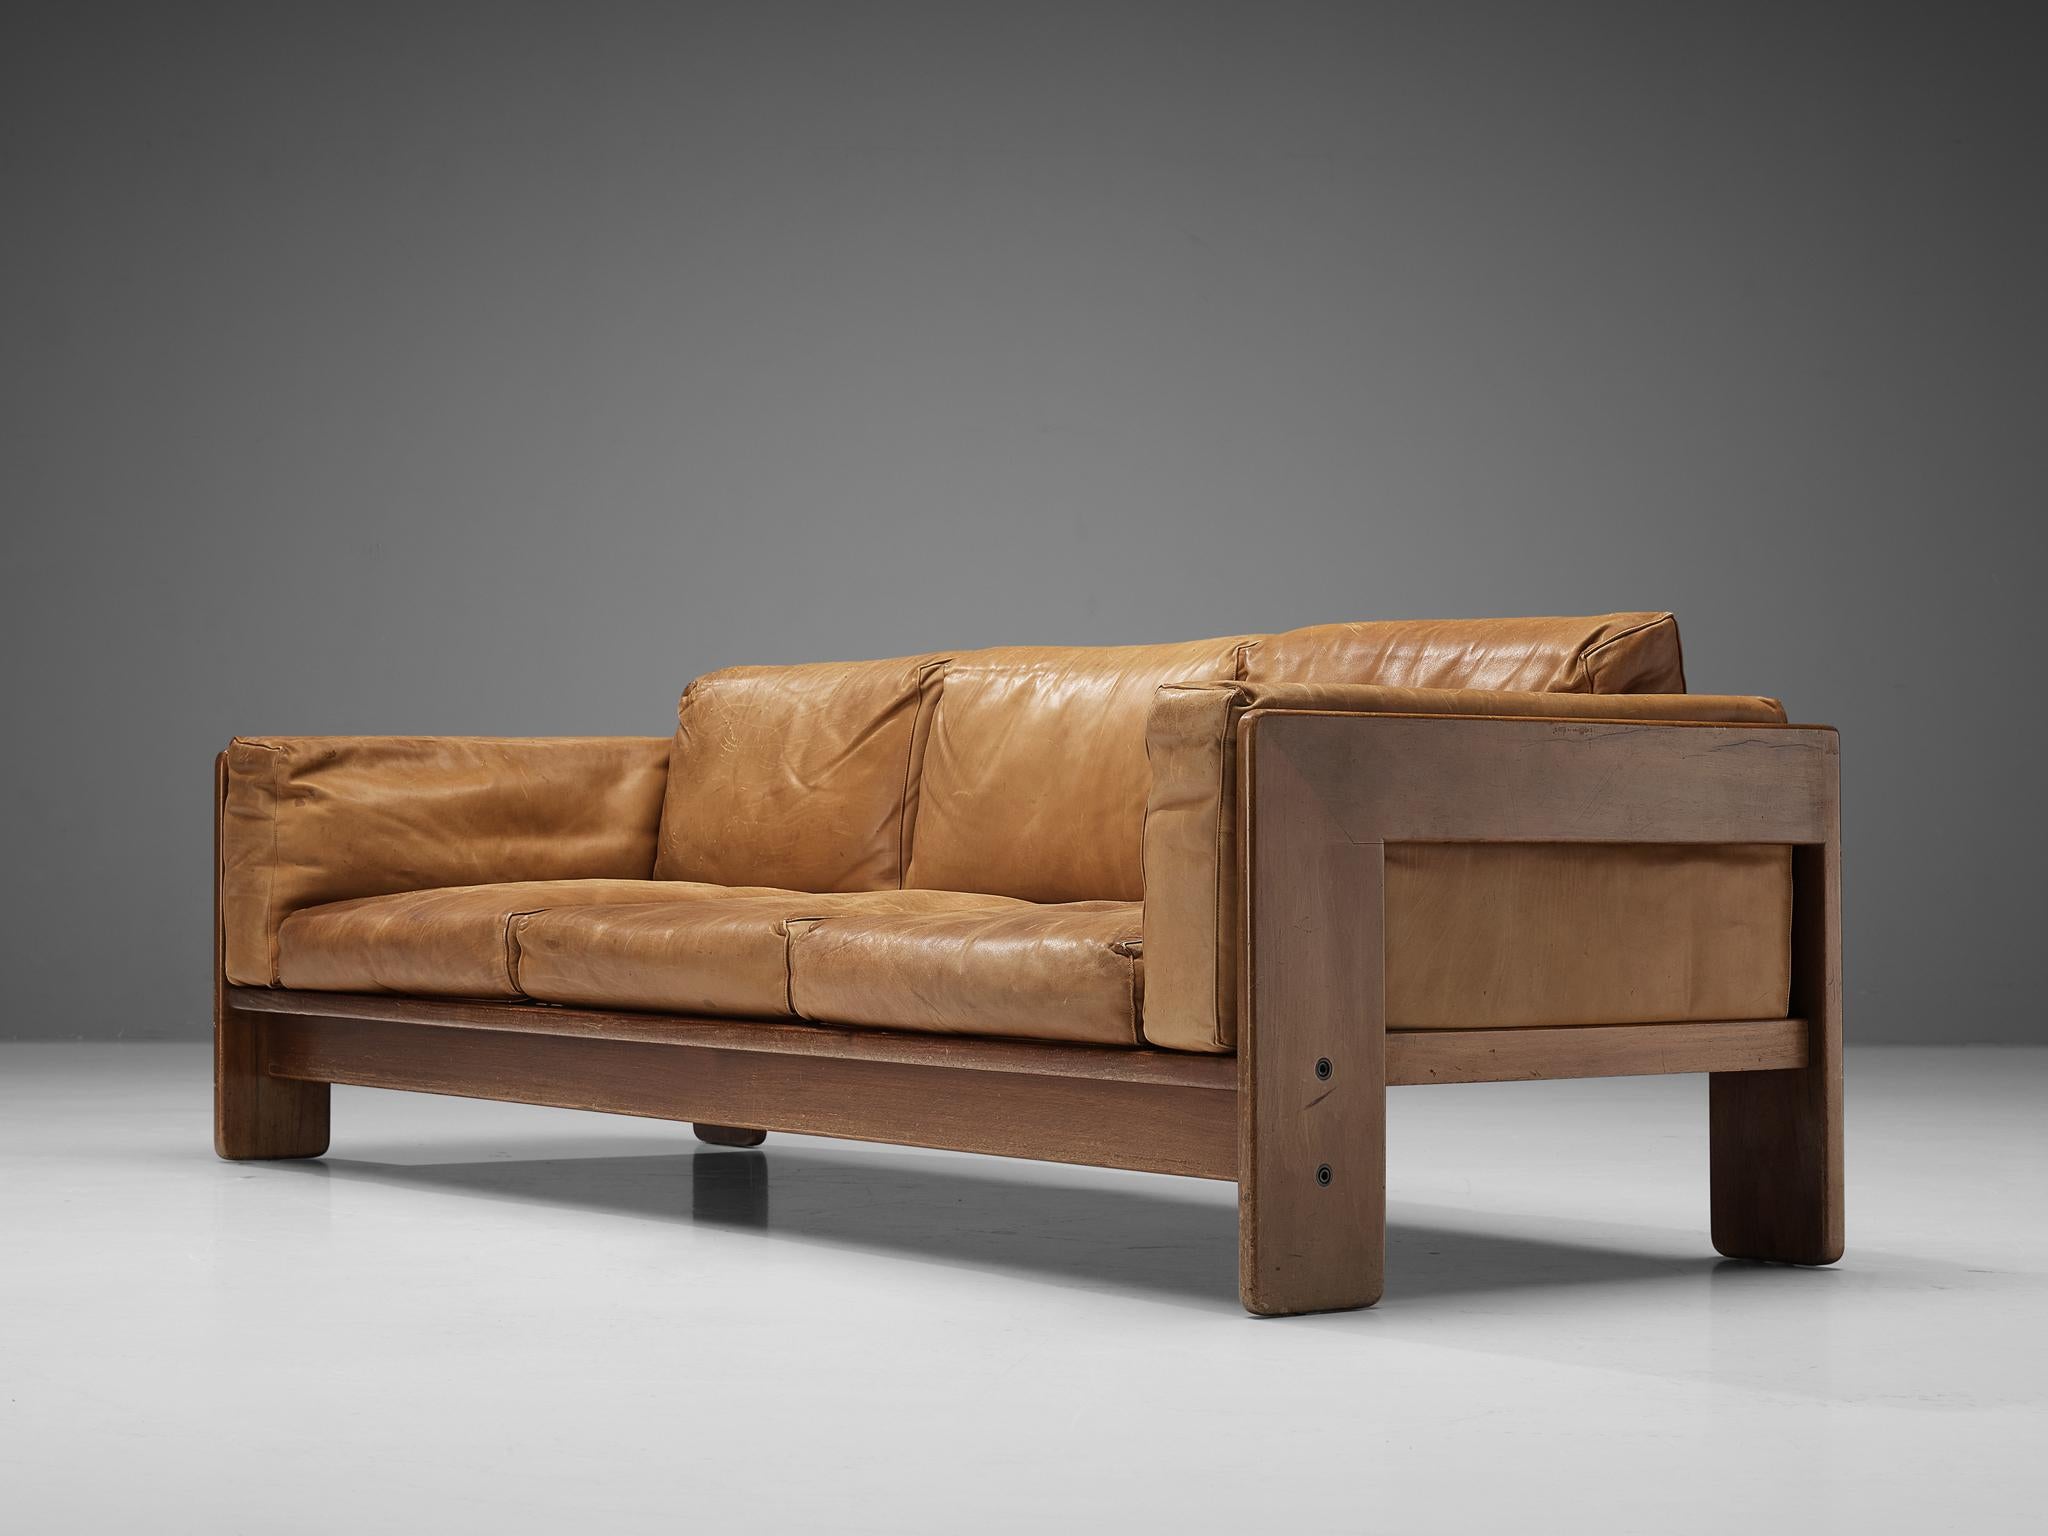 Afra & Tobia Scarpa for Gavina 'Bastiano' Sofa in Patinated Brown Leather 1